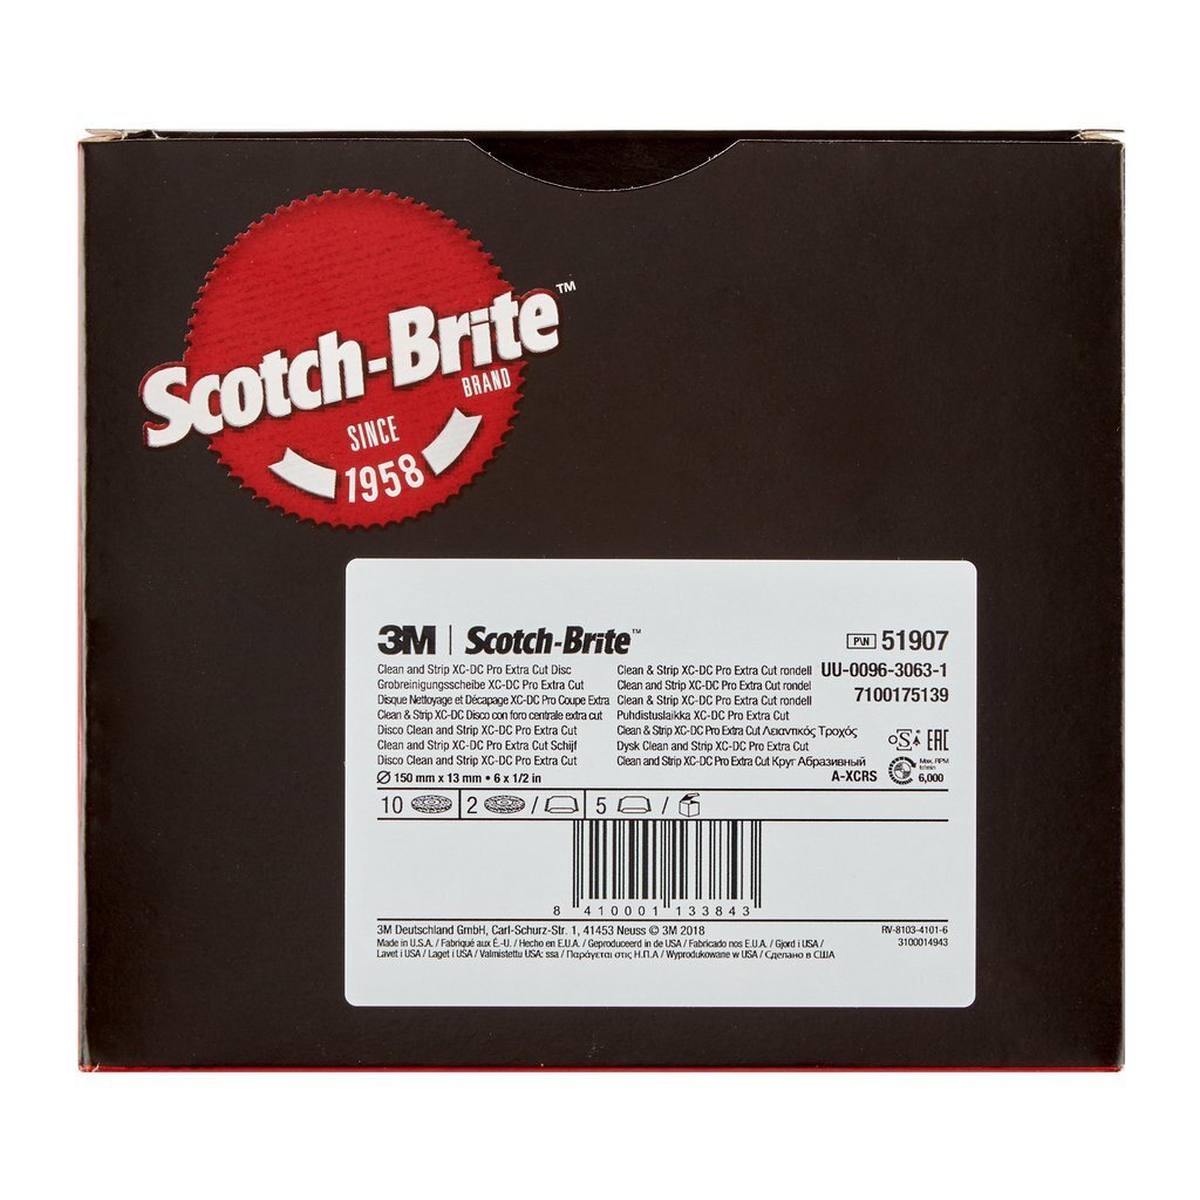 3M Scotch-Brite grove reinigingsschijf XT-DC Pro Extra Cut, 150 mm x 13 mm, A, extra grof